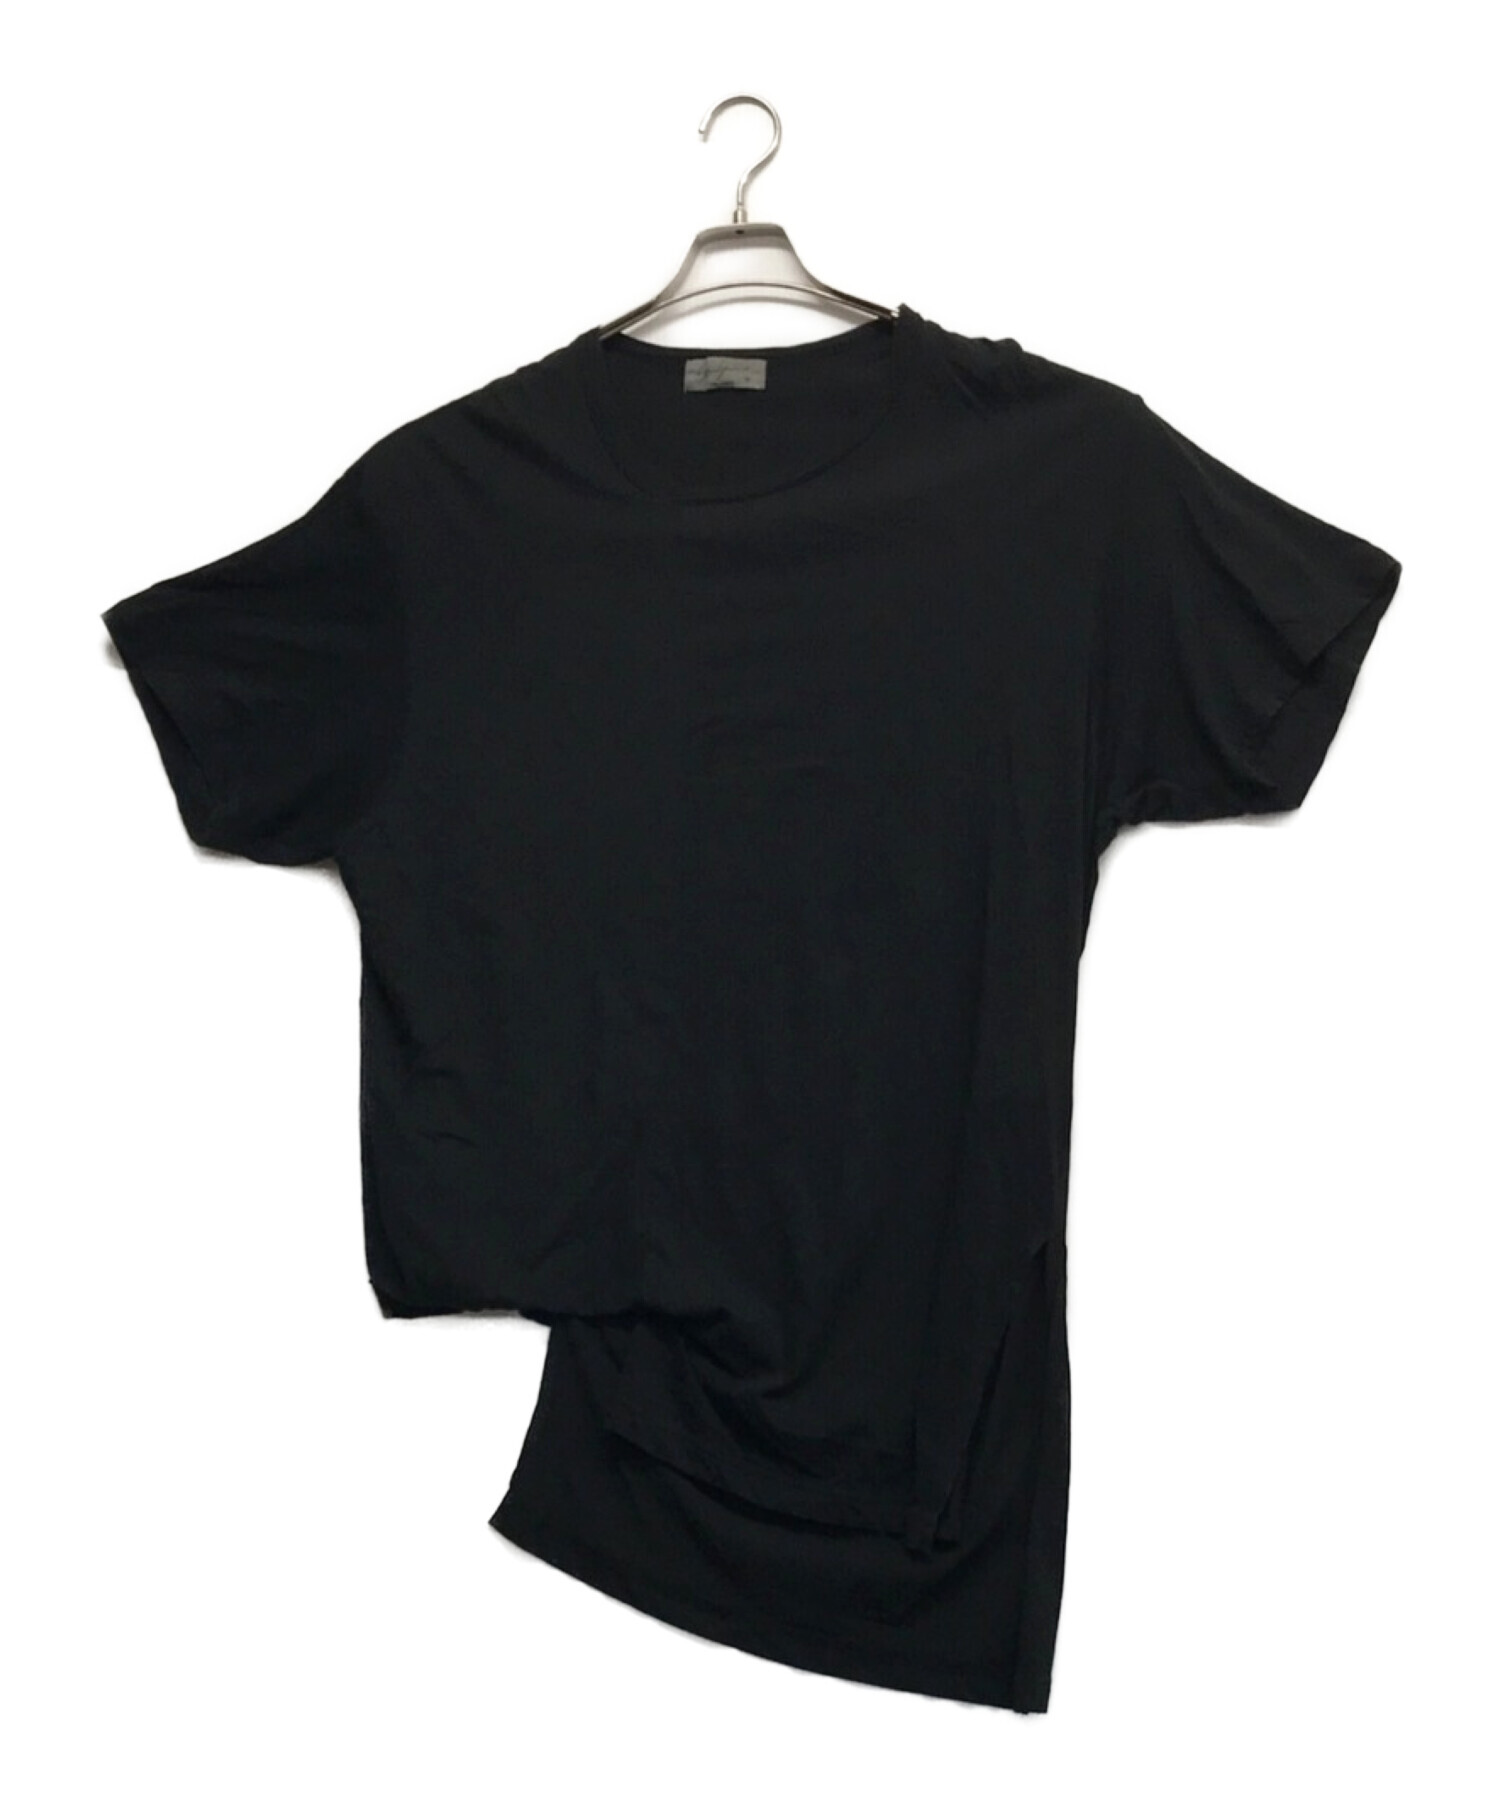 Yohji Yamamoto pour homme (ヨウジヤマモト プールオム) 綿天竺アシンメトリードレープ切替半袖Tシャツ ブラック サイズ:3